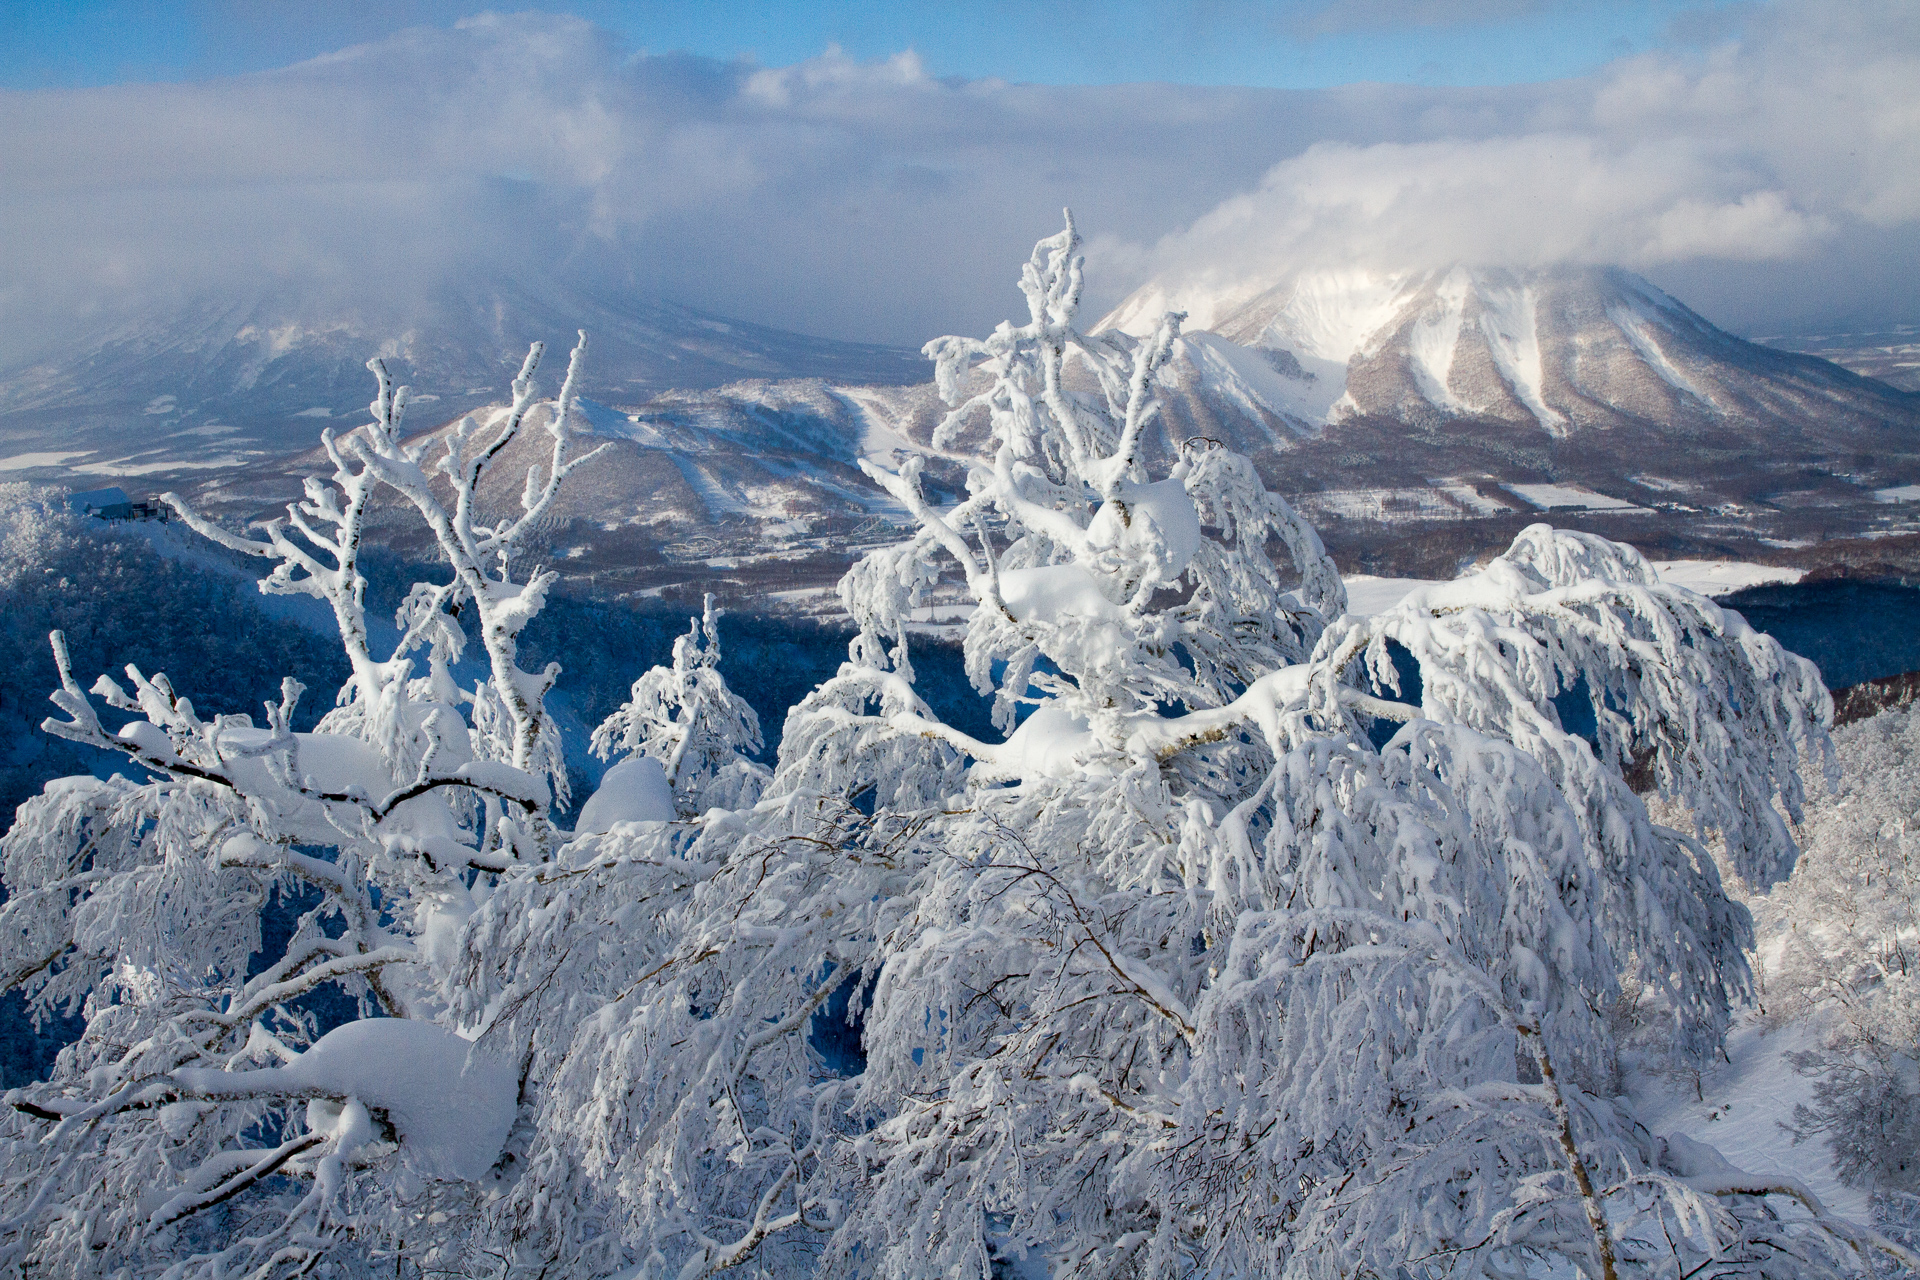 A winter landscape in Rusutsu, Japan.